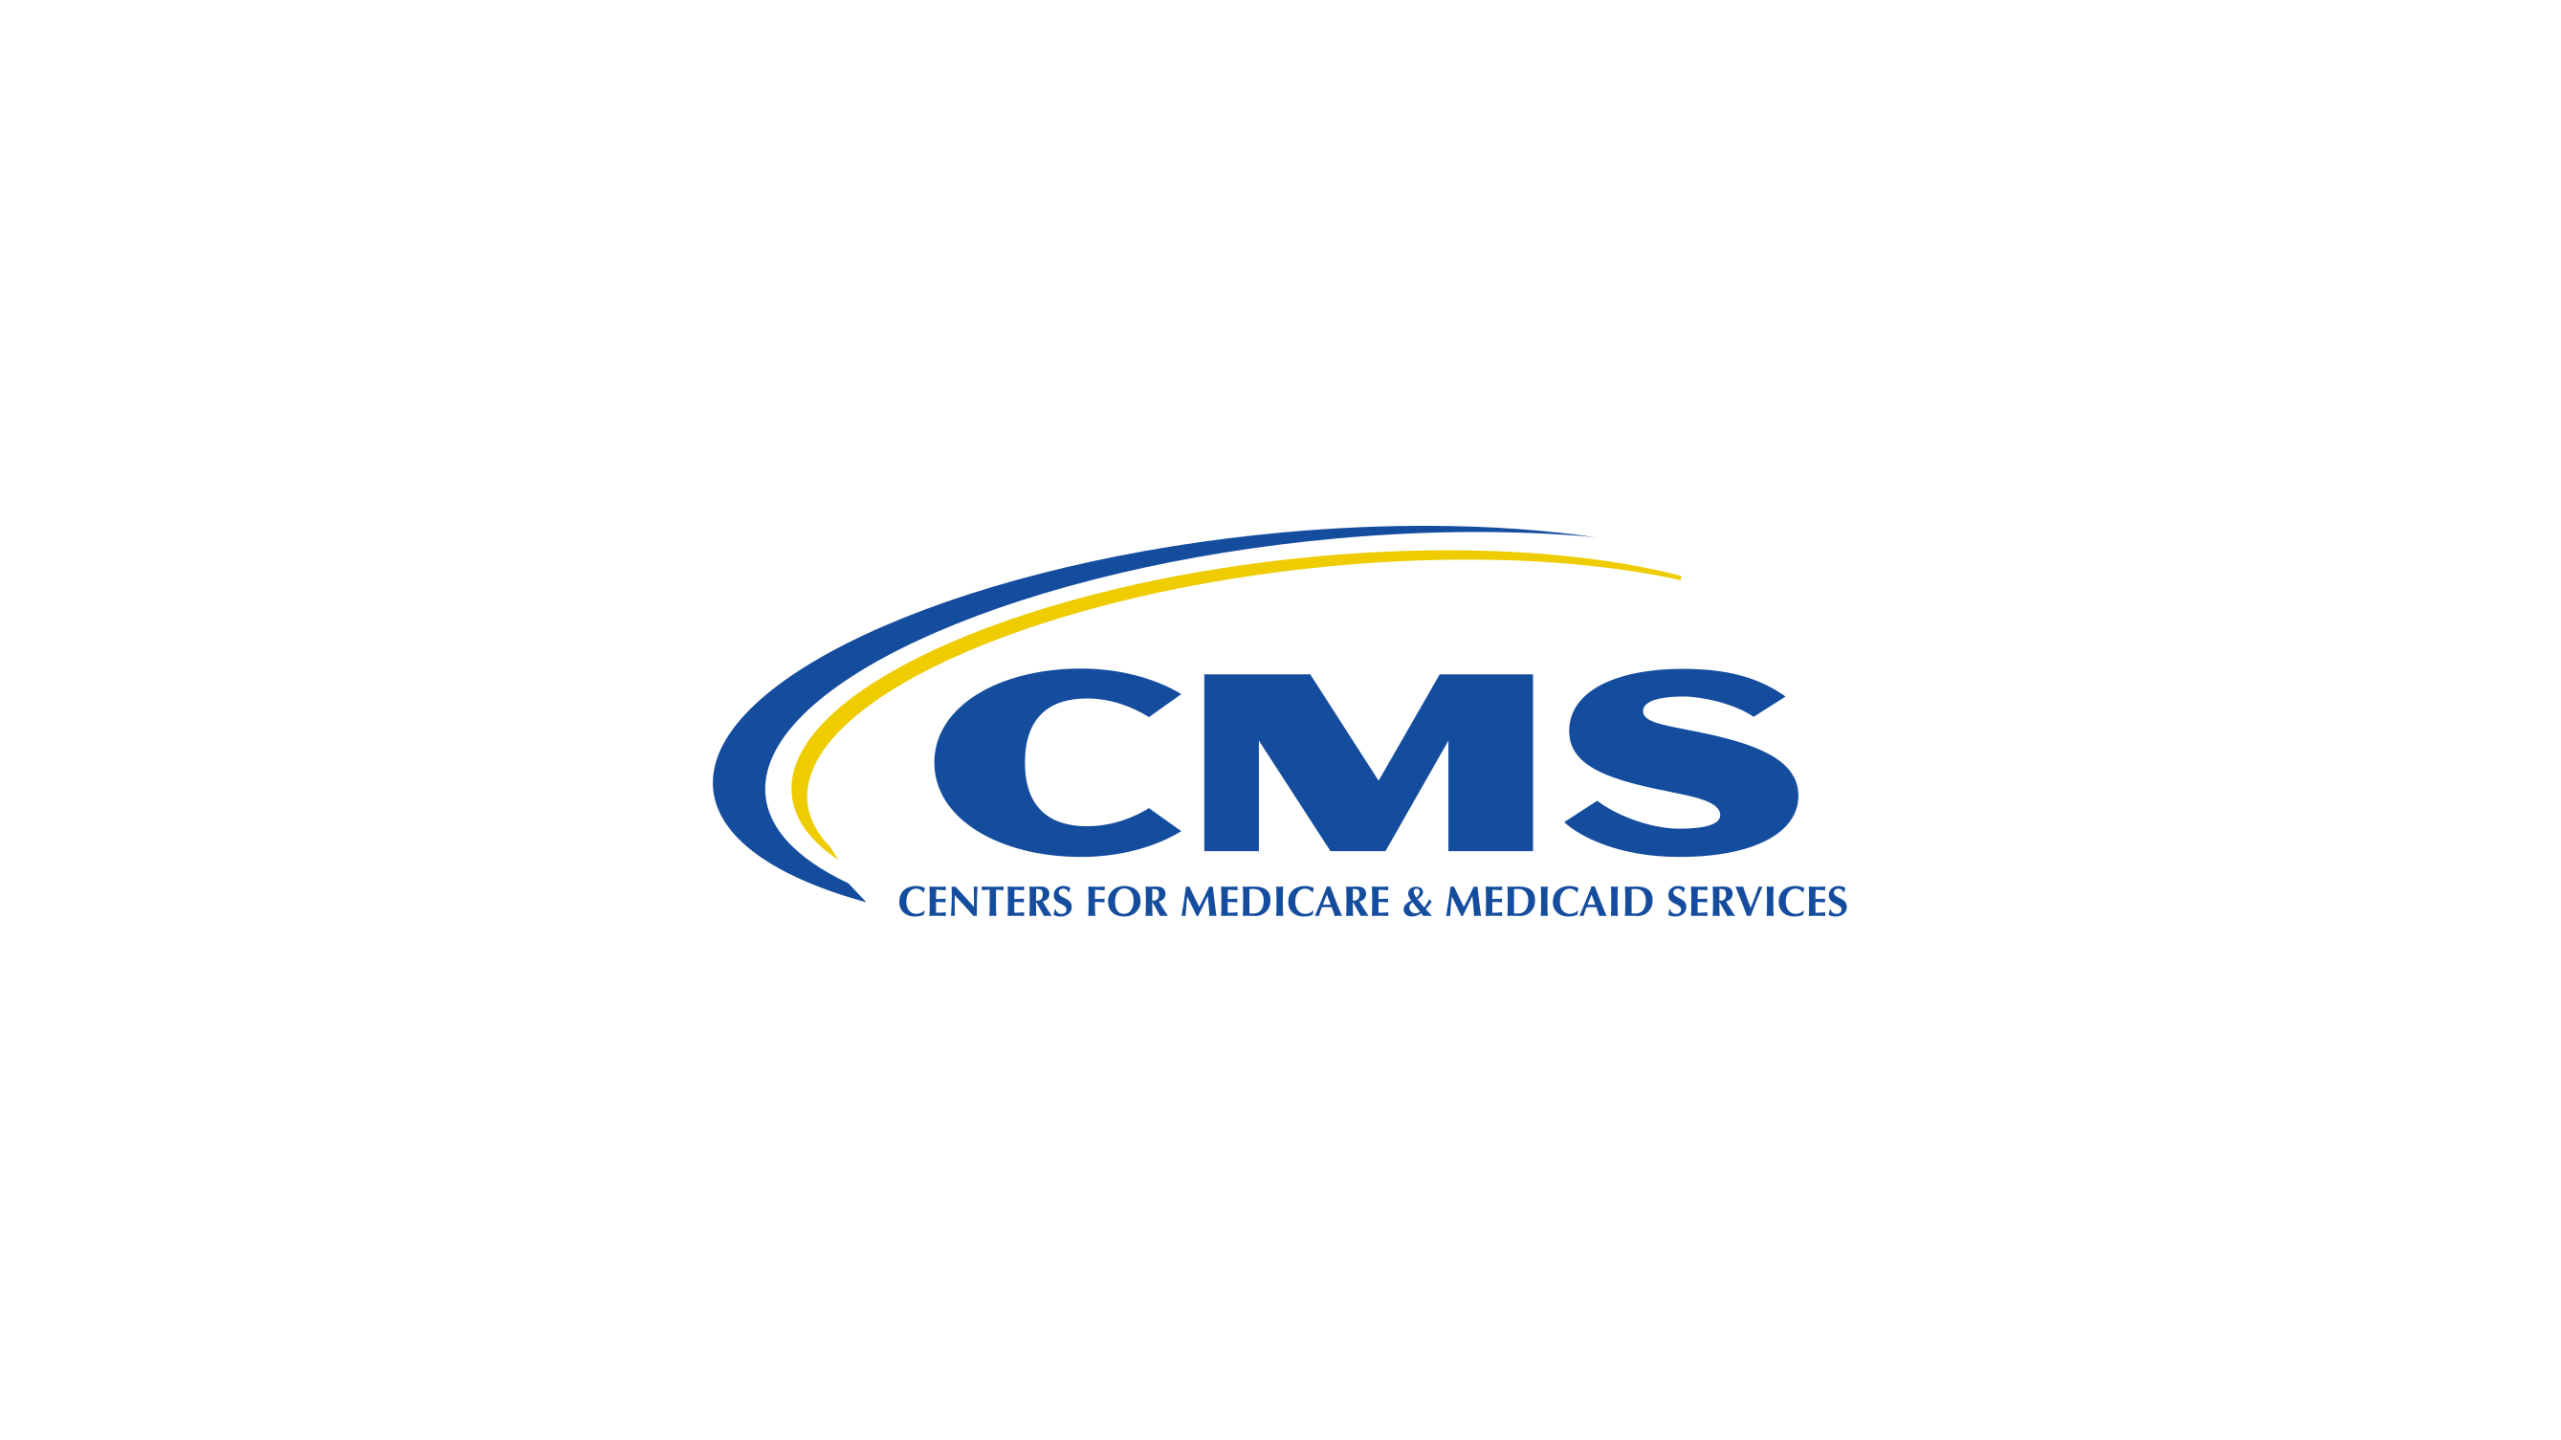 Centers for Medicare & Medicaid Services (Alabama, Georgia); 
Southeast Quality Network (Pending)